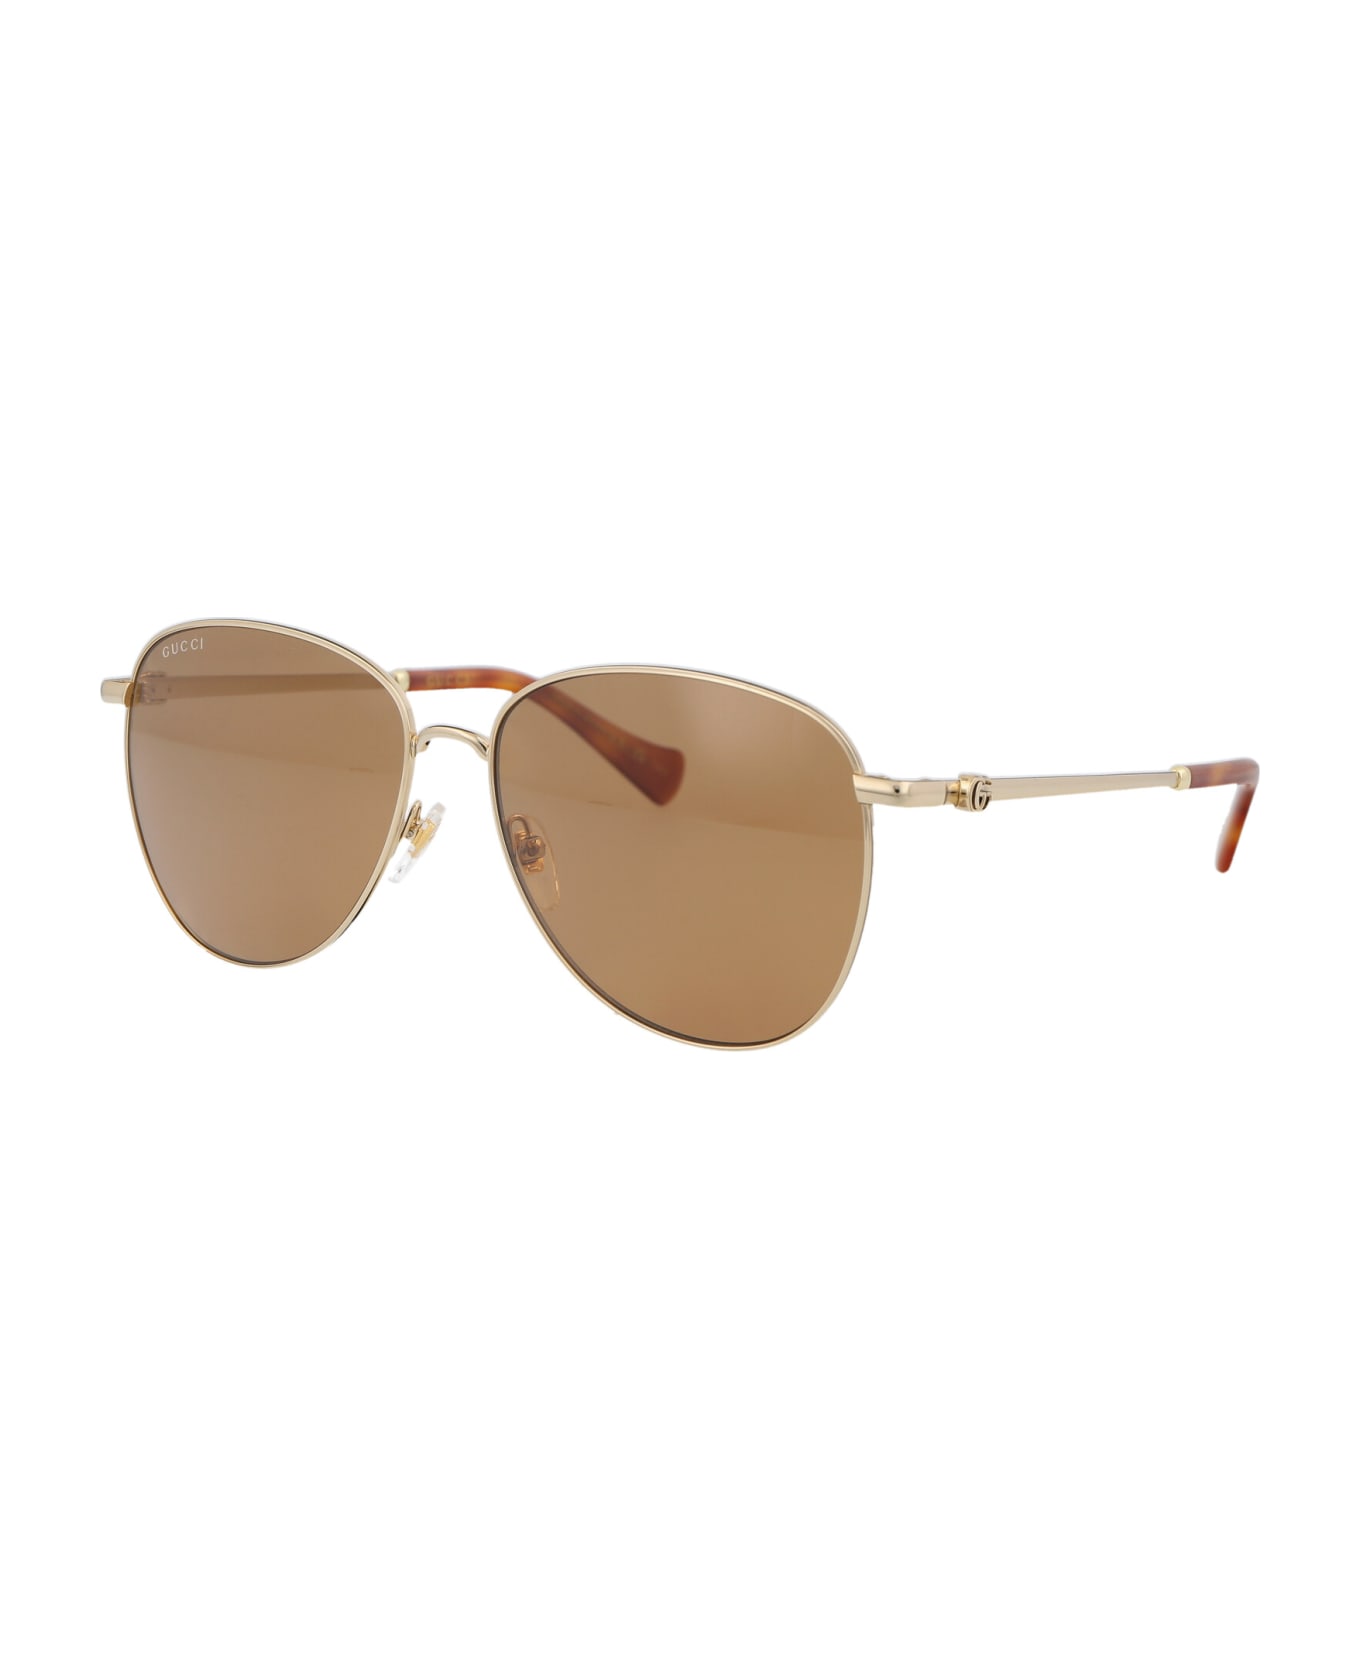 Gucci Eyewear Gg1419s Sunglasses - 002 GOLD GOLD BROWN